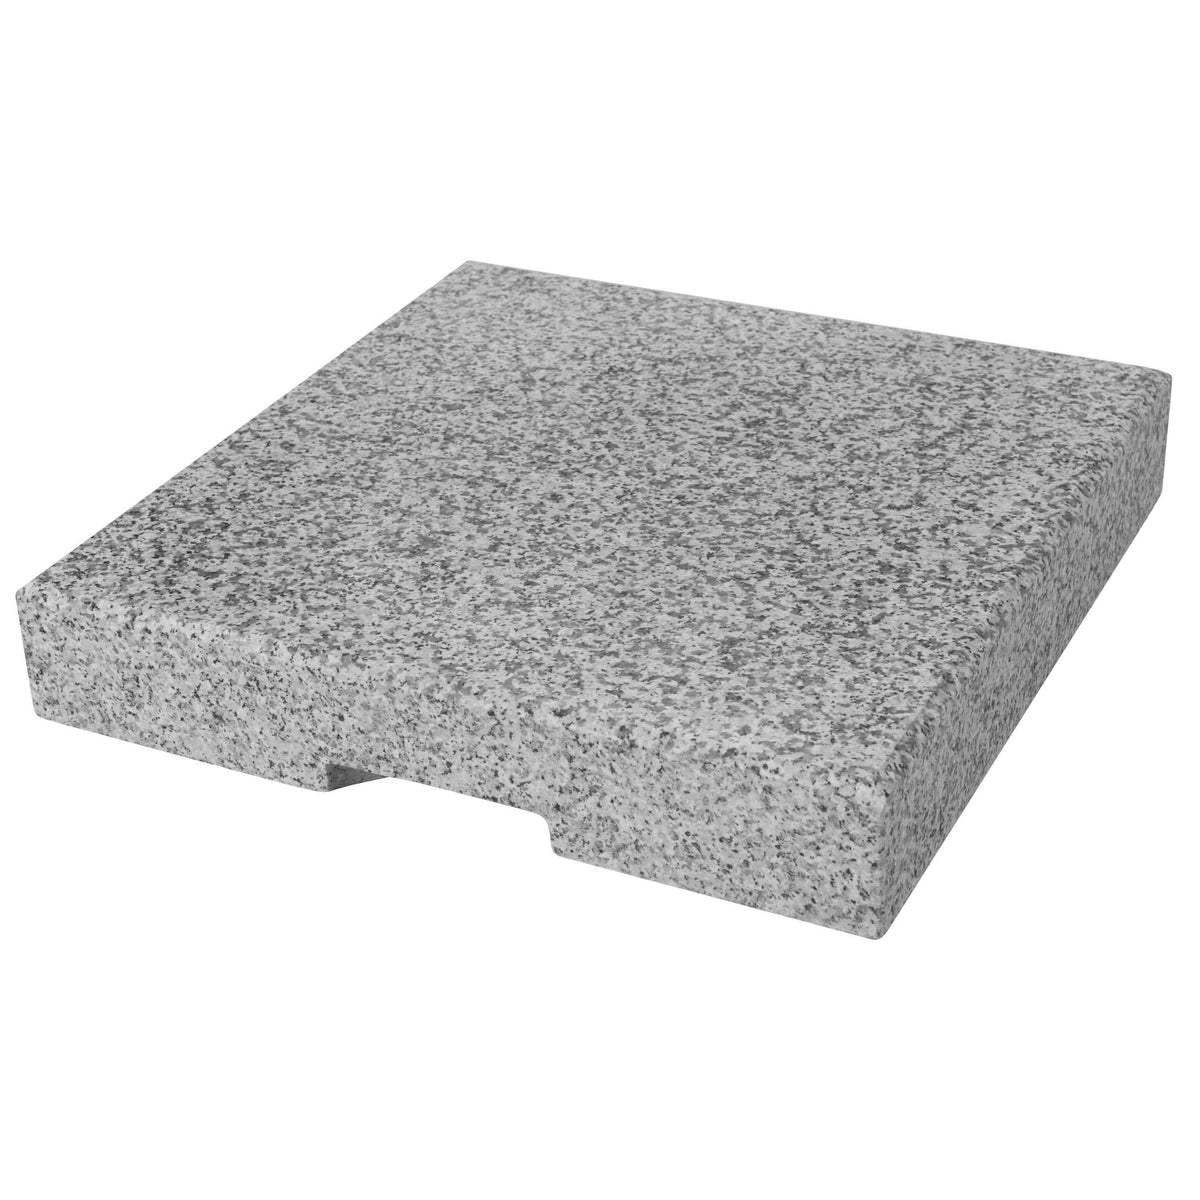 Granite Design-weight platter Grey 55kg